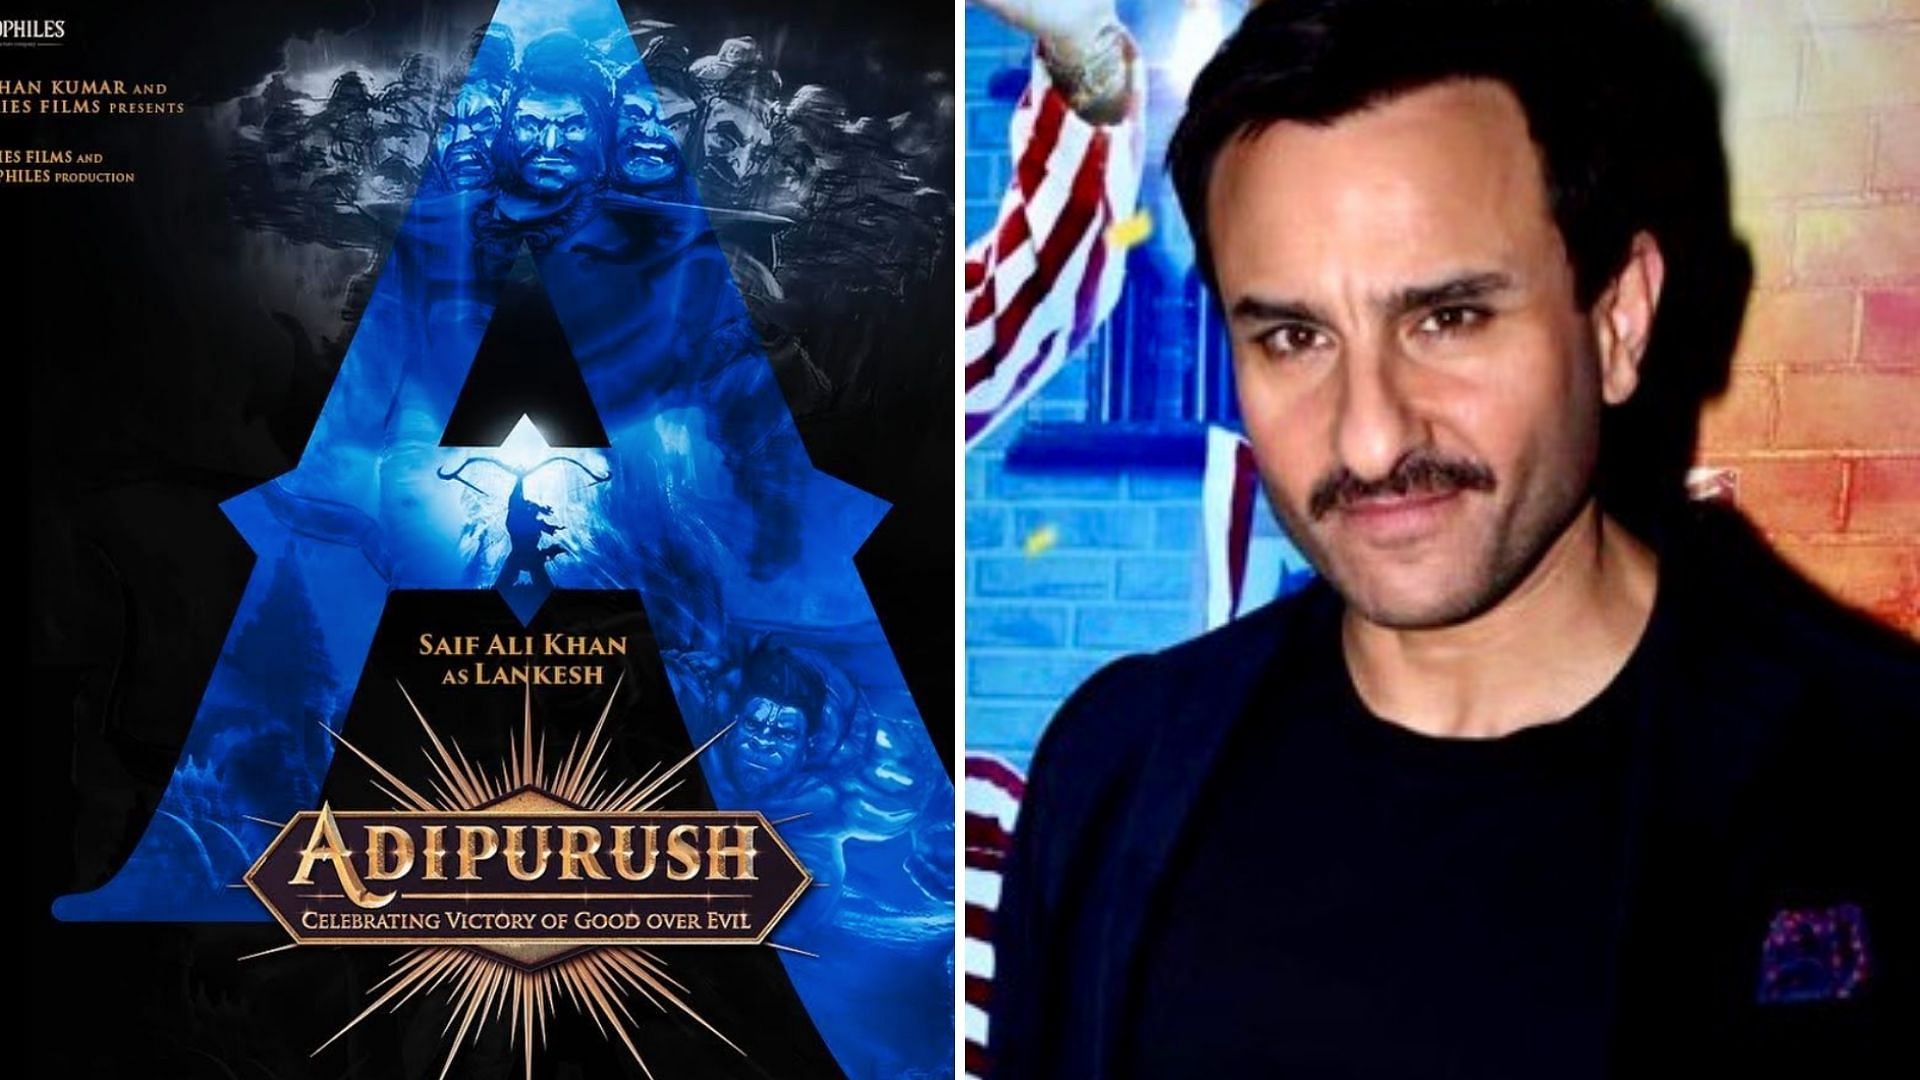 Saif Ali Khan to play the antagonist in 'Adipurush', starring Prabhas.